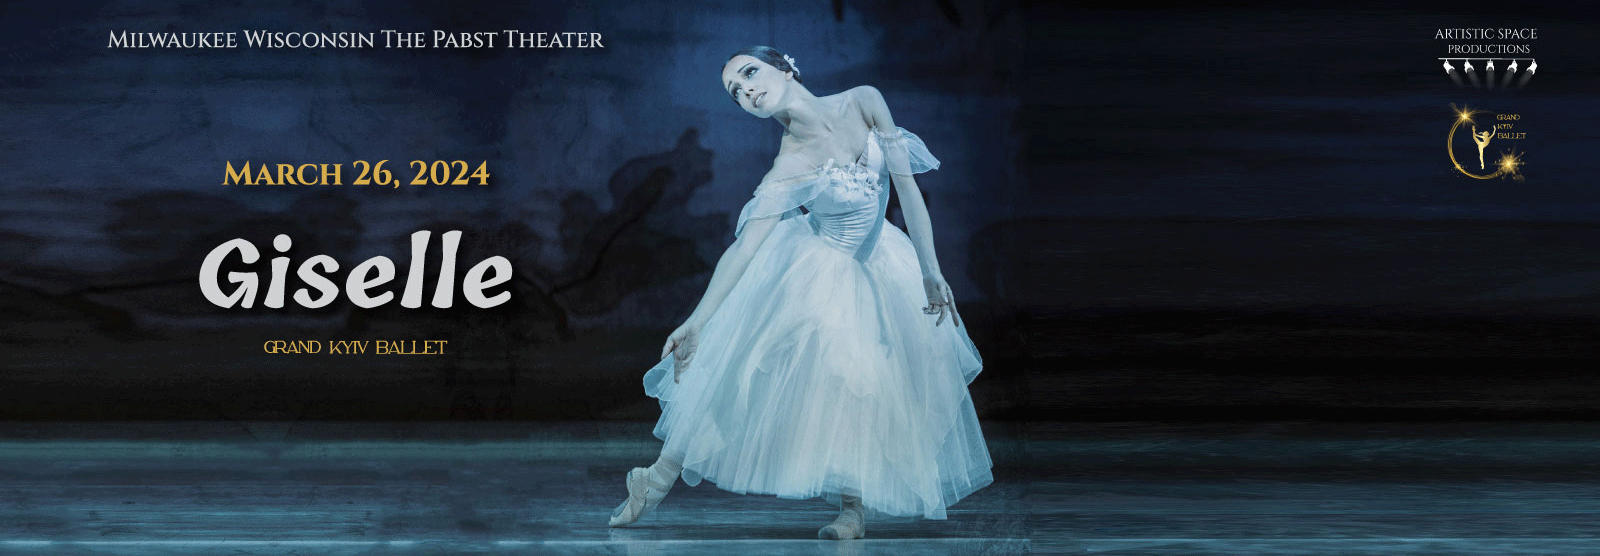 Grand Kyiv Ballet Giselle